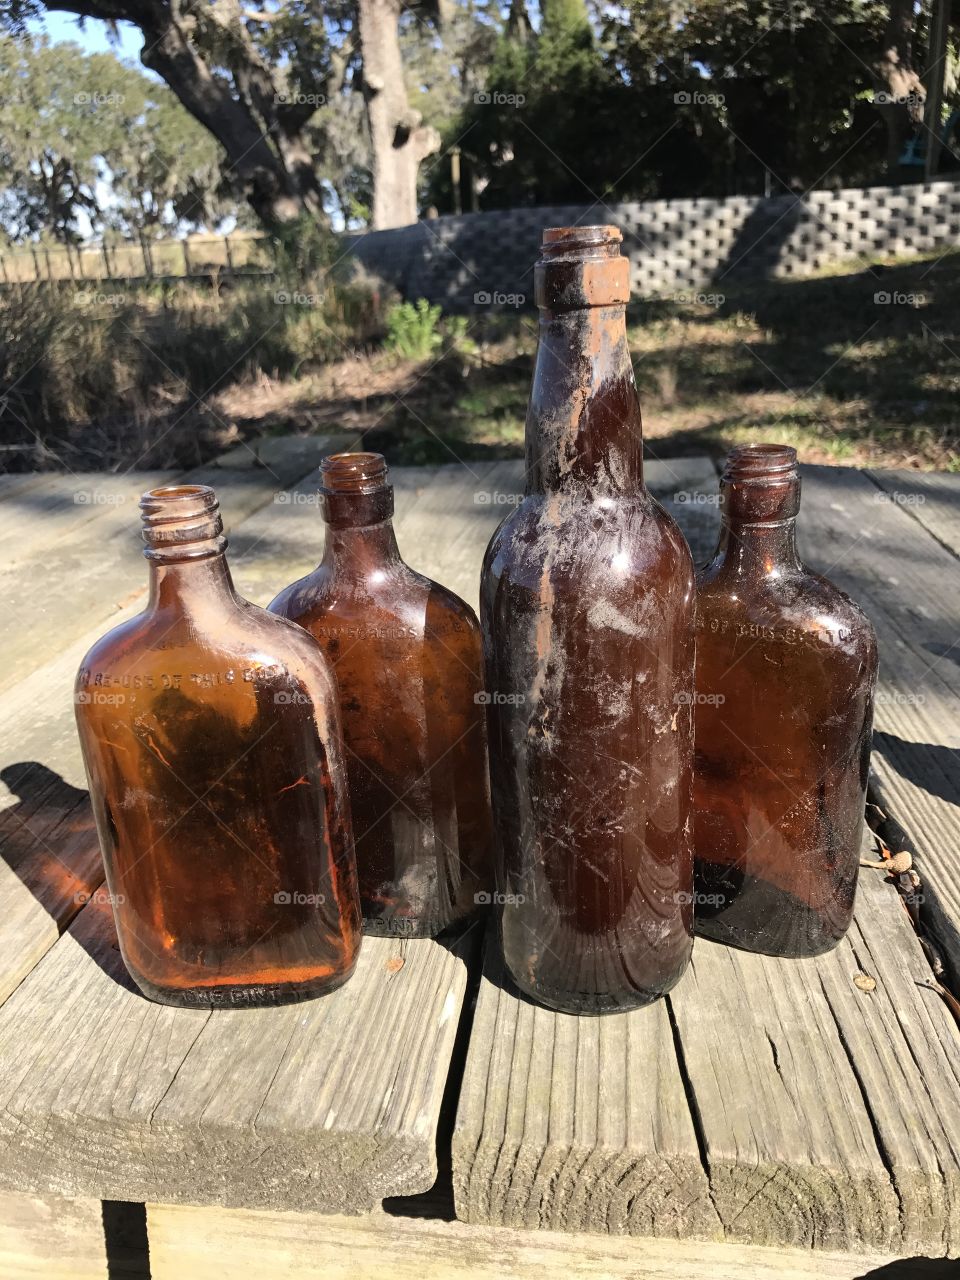 Prohibition bottles